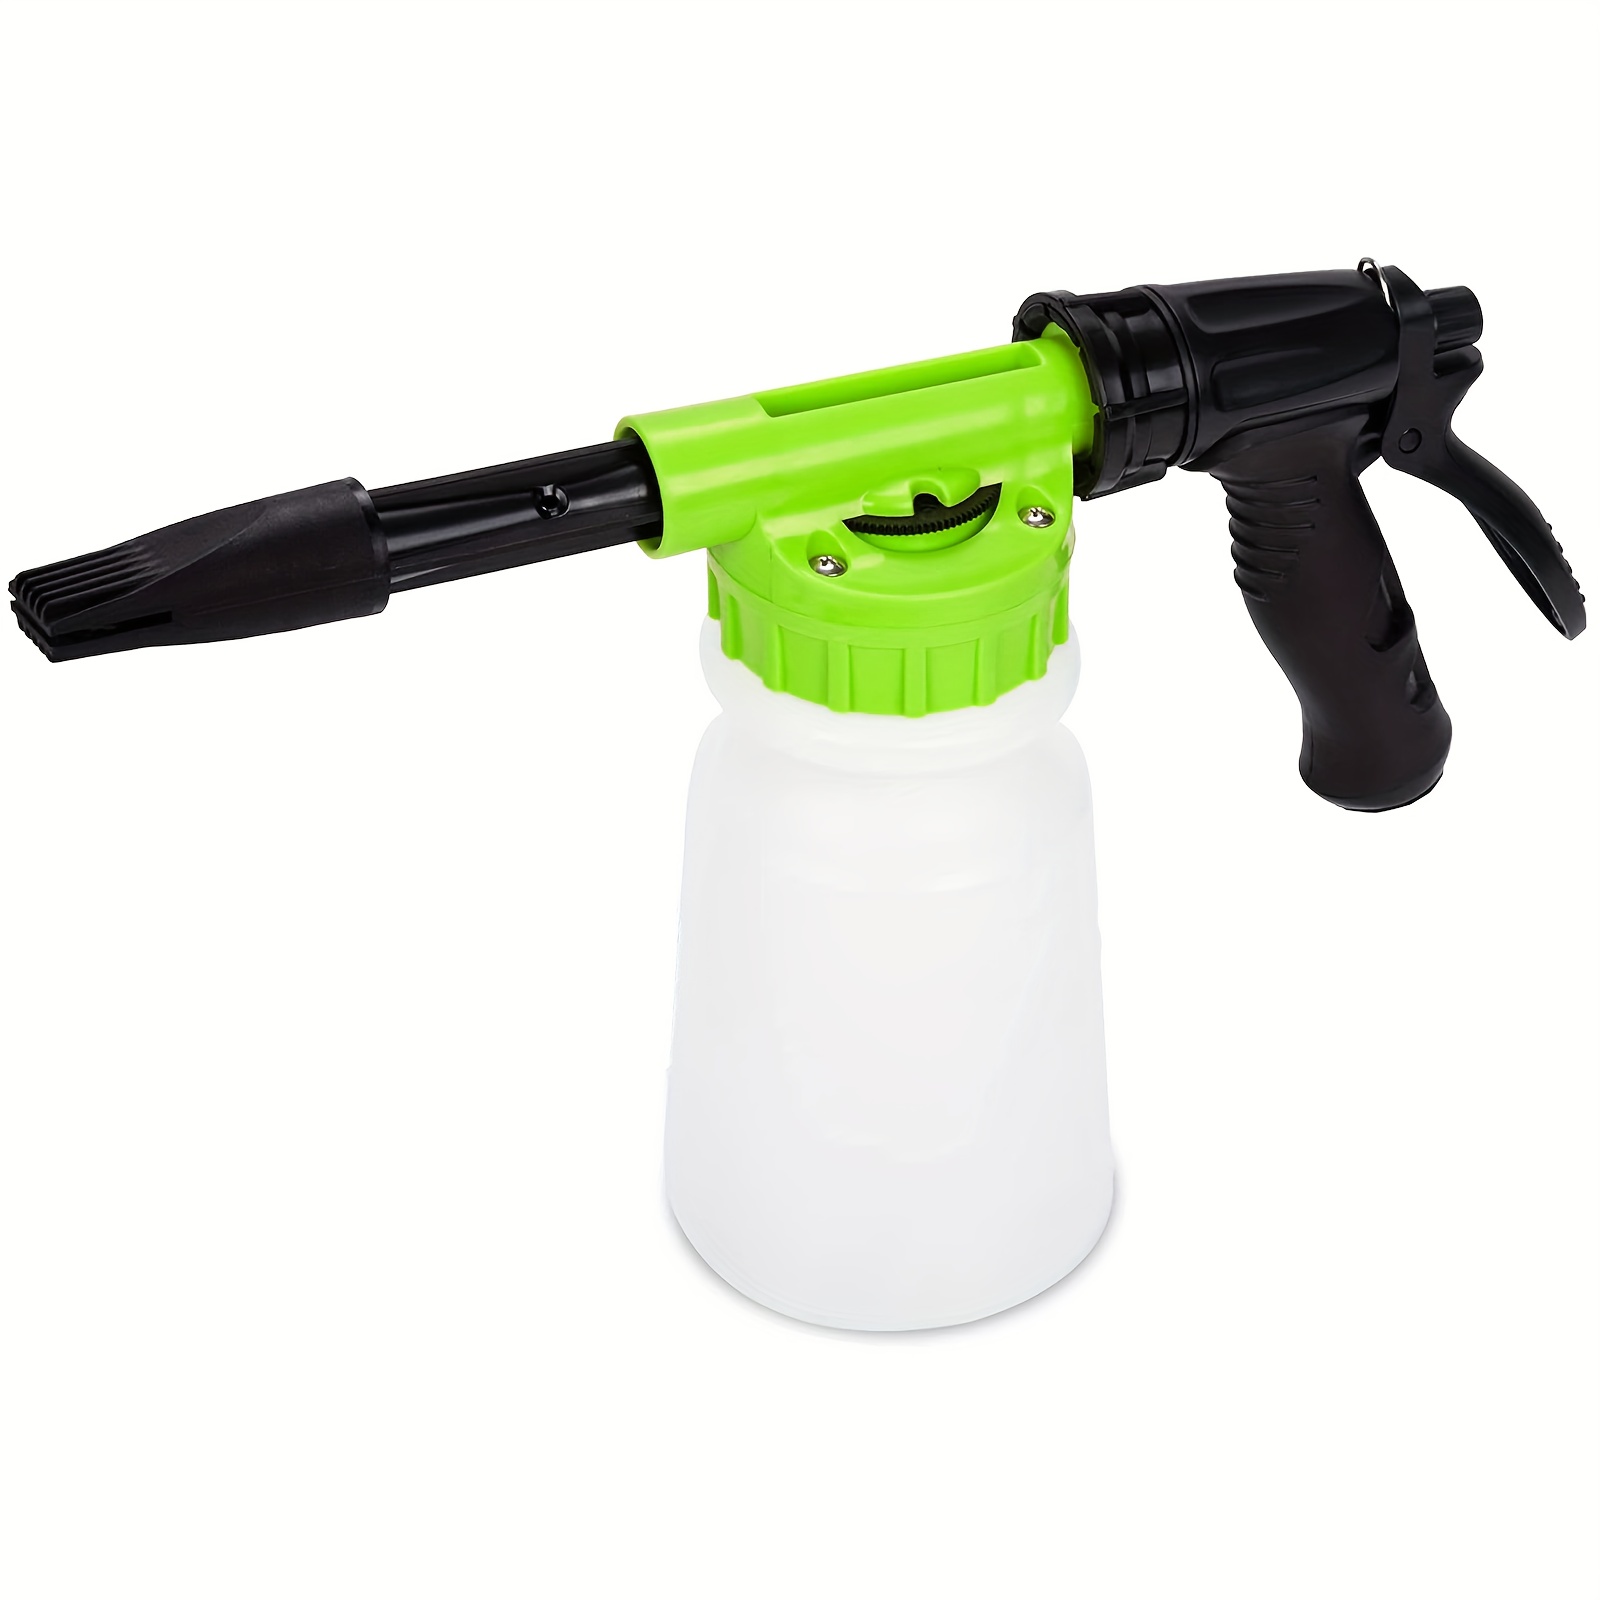 800ml Foam Gun For Car Washing Efficient Shampoo Handheld Sprayer